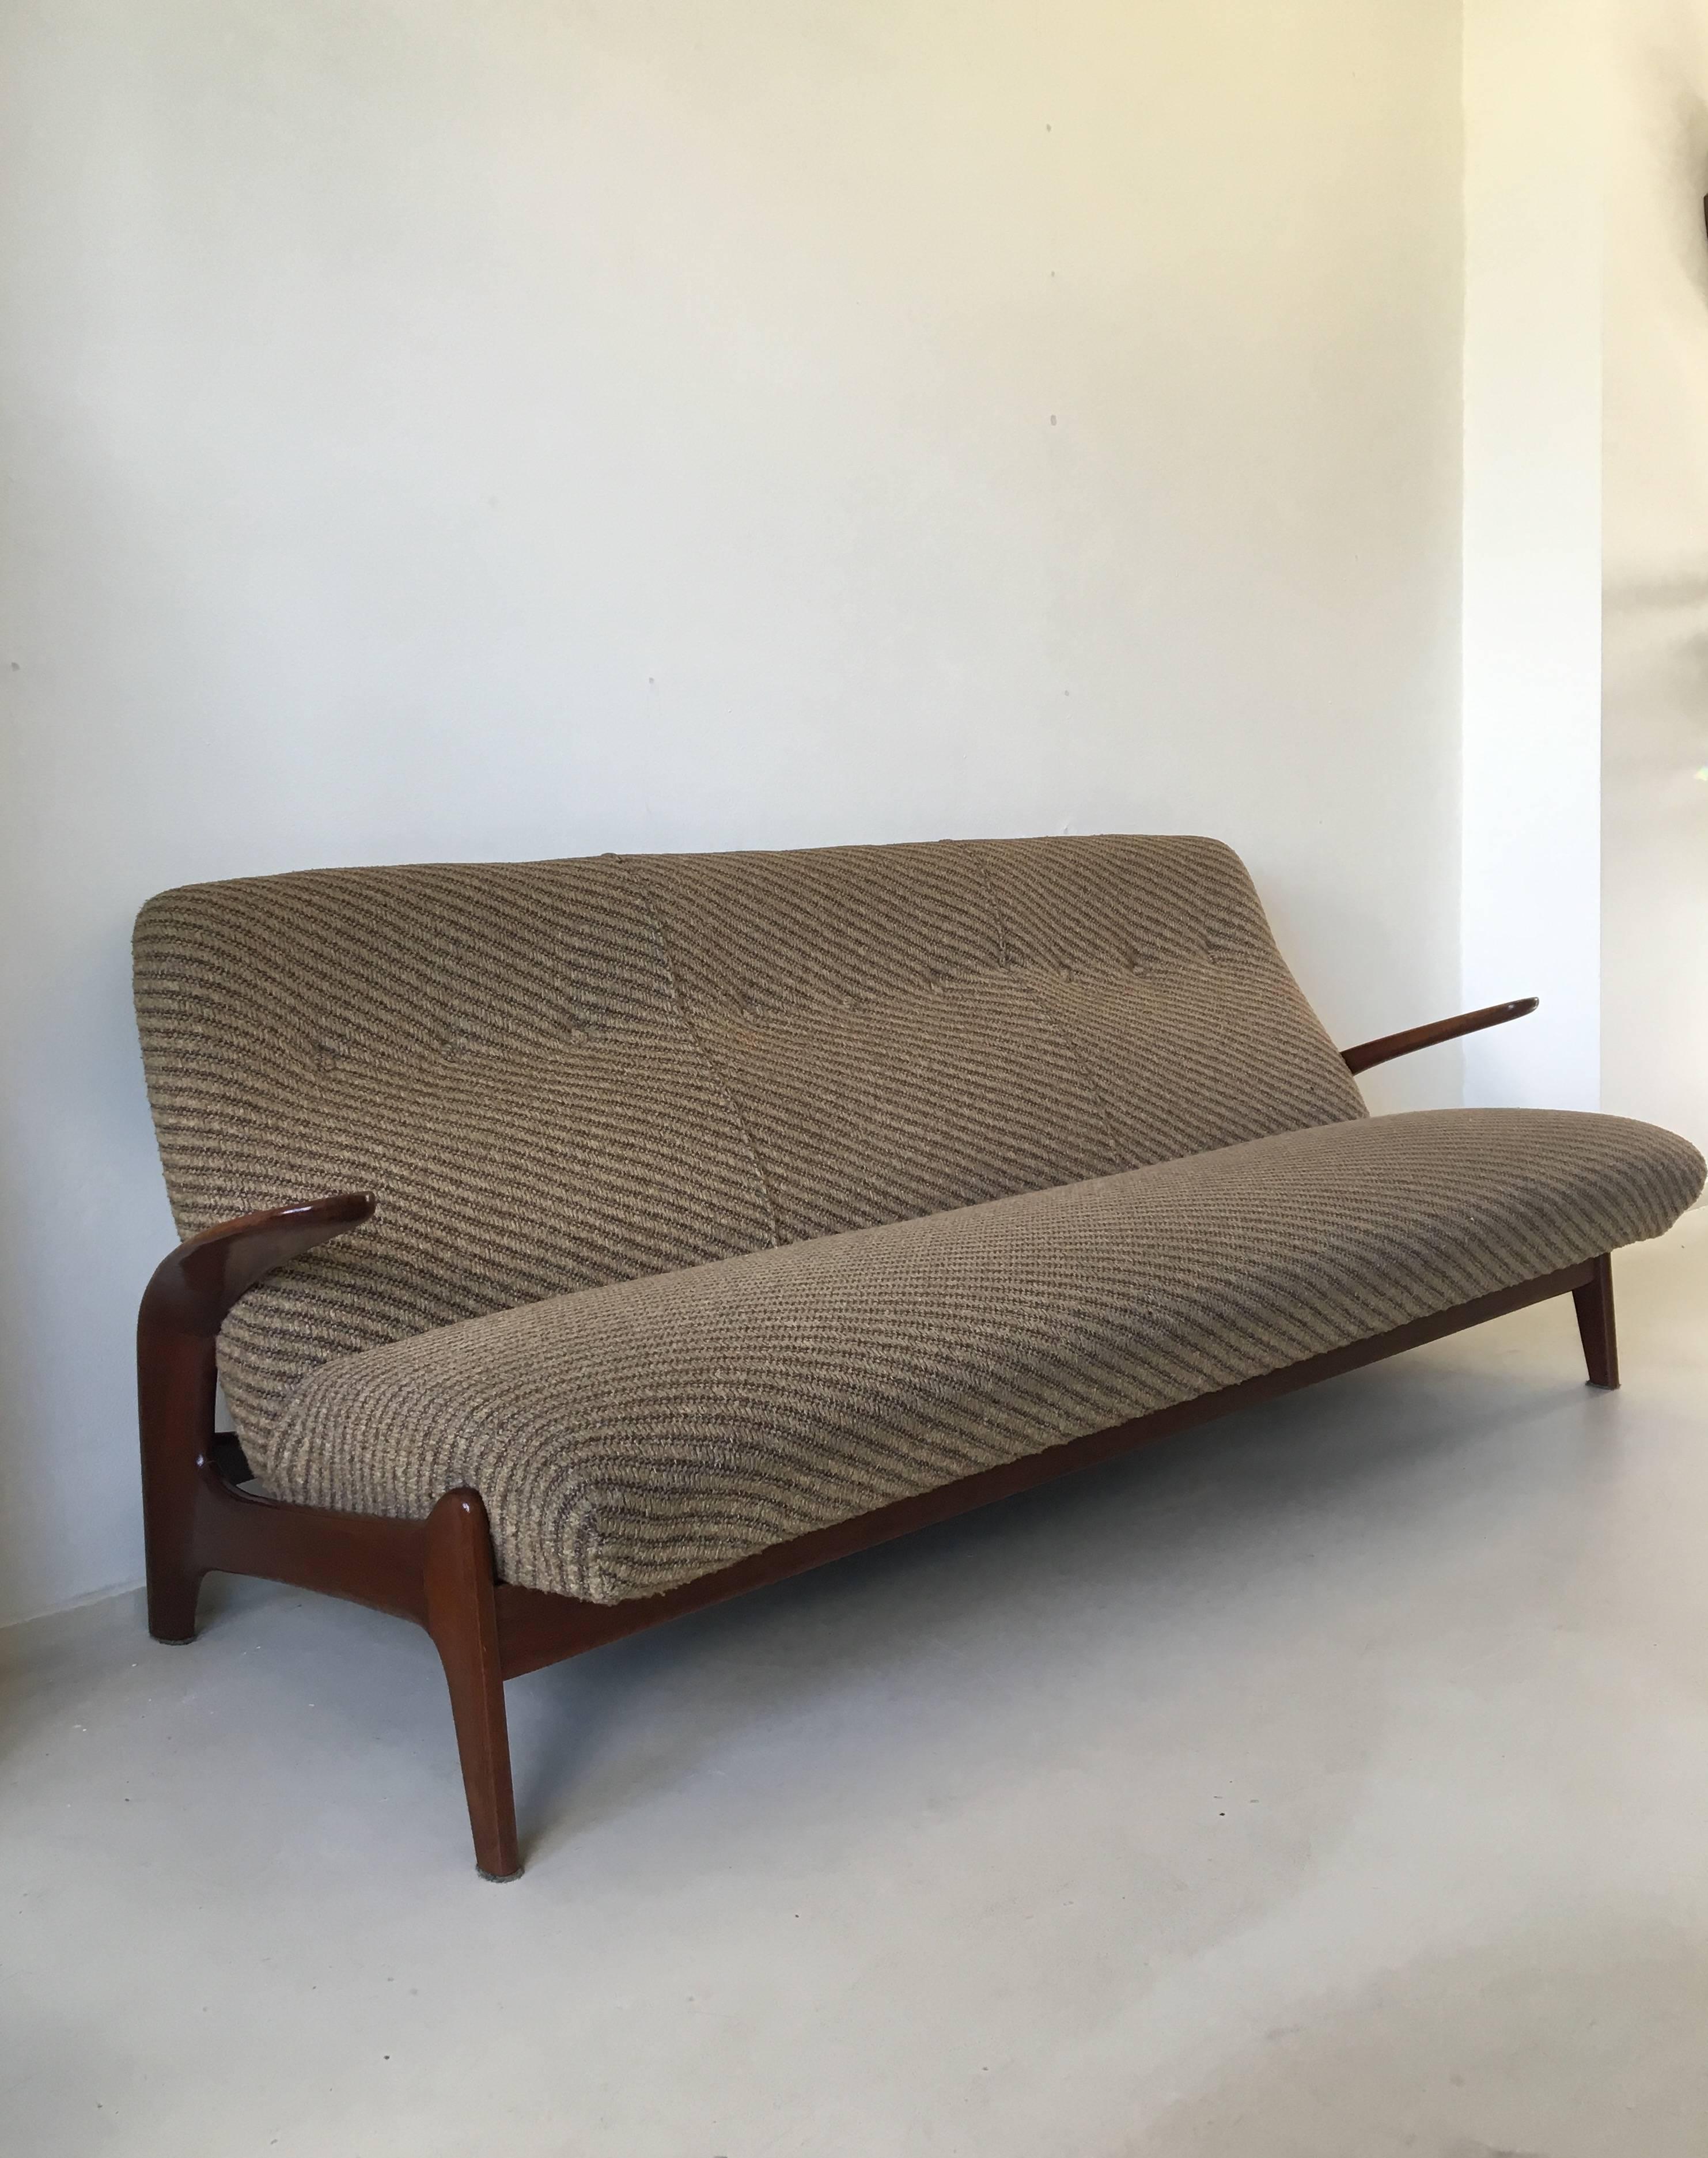 1960s sofa